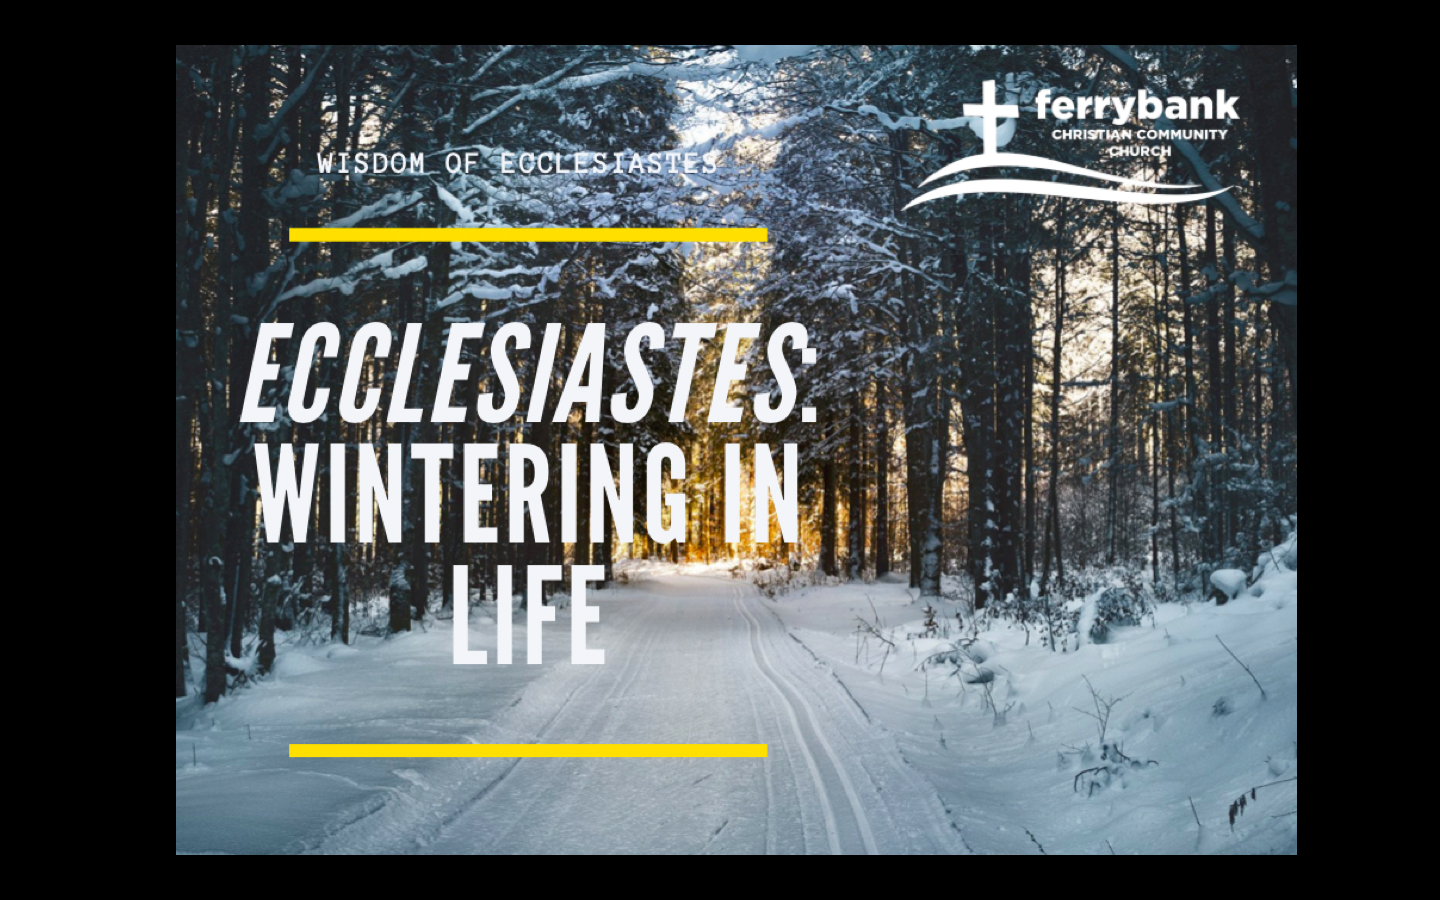 Wisdom of Ecclesiastes: Wintering Life: Barren or Beautiful?